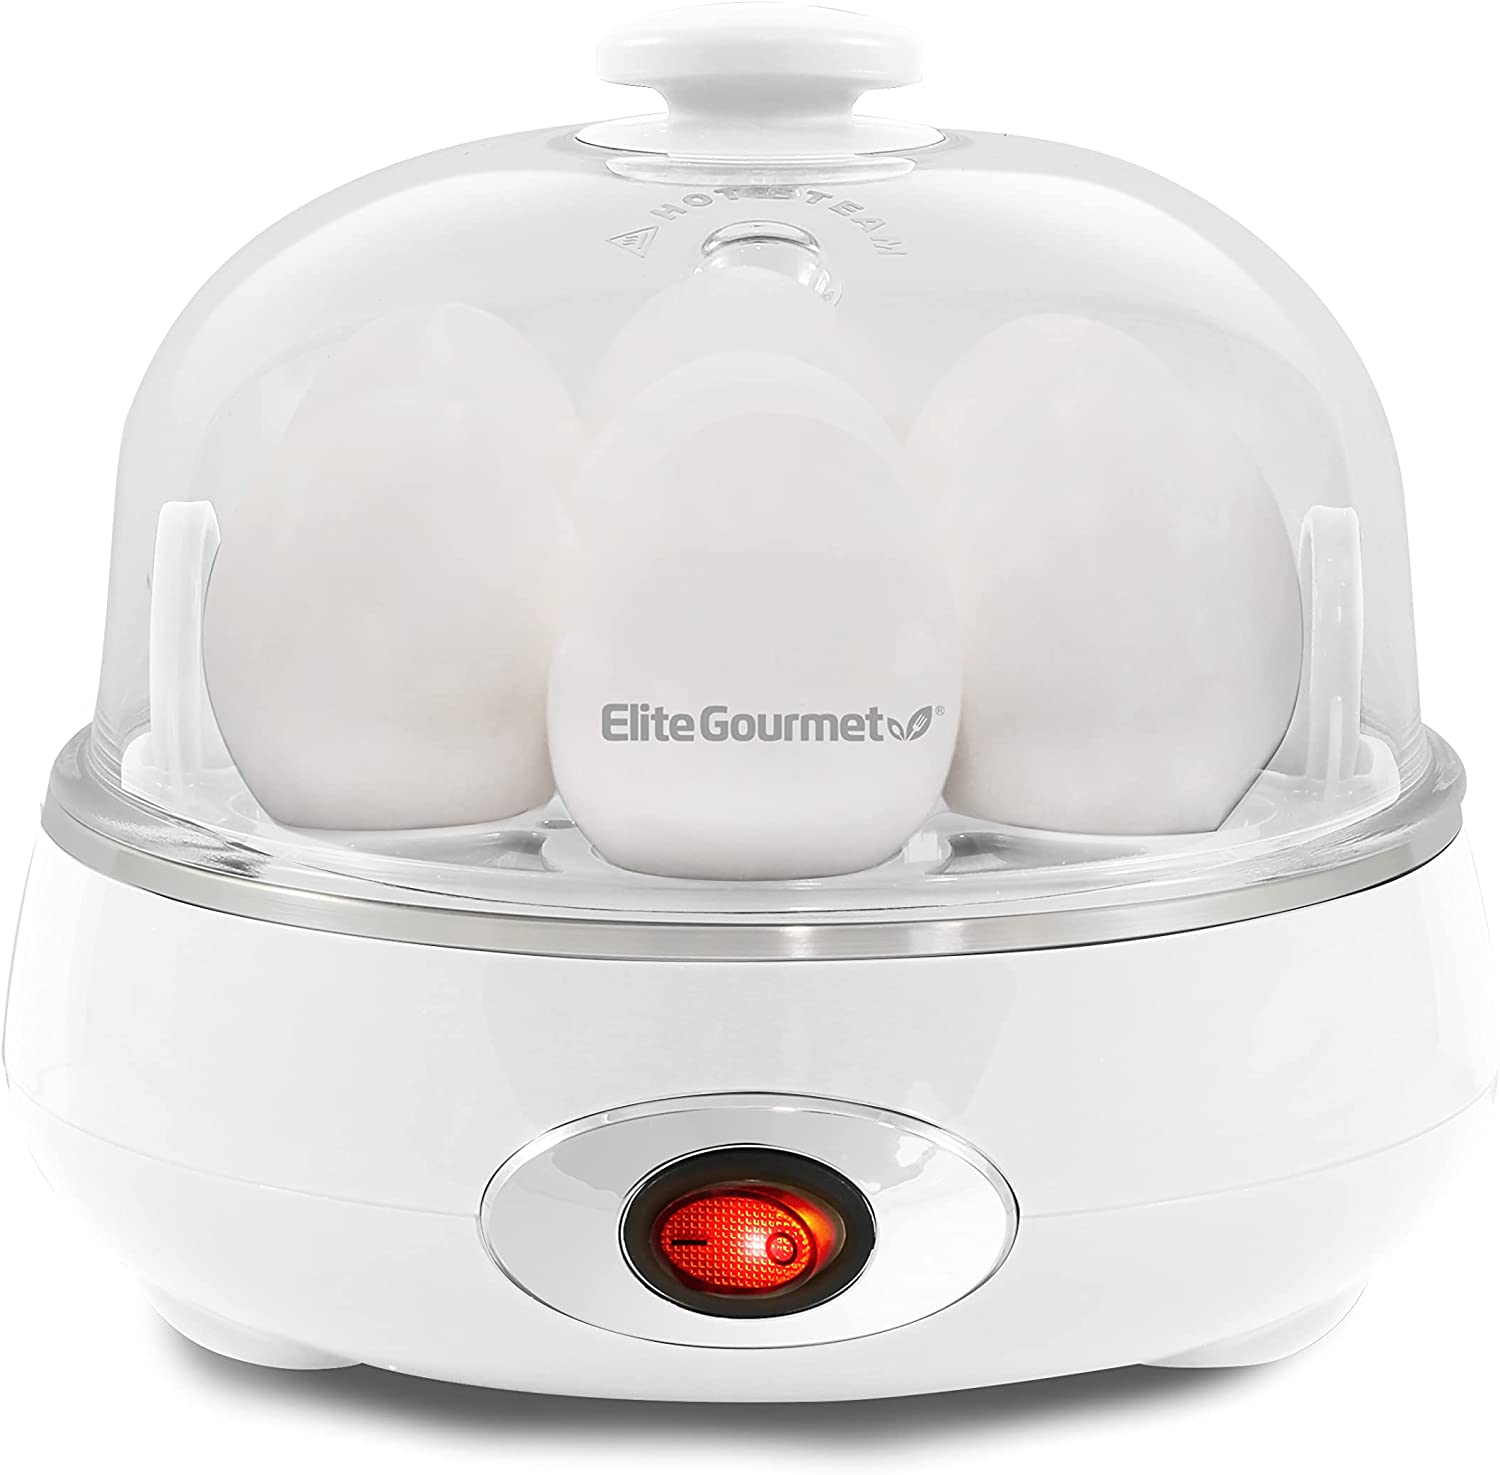 https://thekrazycouponlady.com/wp-content/uploads/2022/07/tiktok-made-me-buy-it-elite-gourmet-rapid-egg-cooker-2022-1658541804-1658541804.jpg